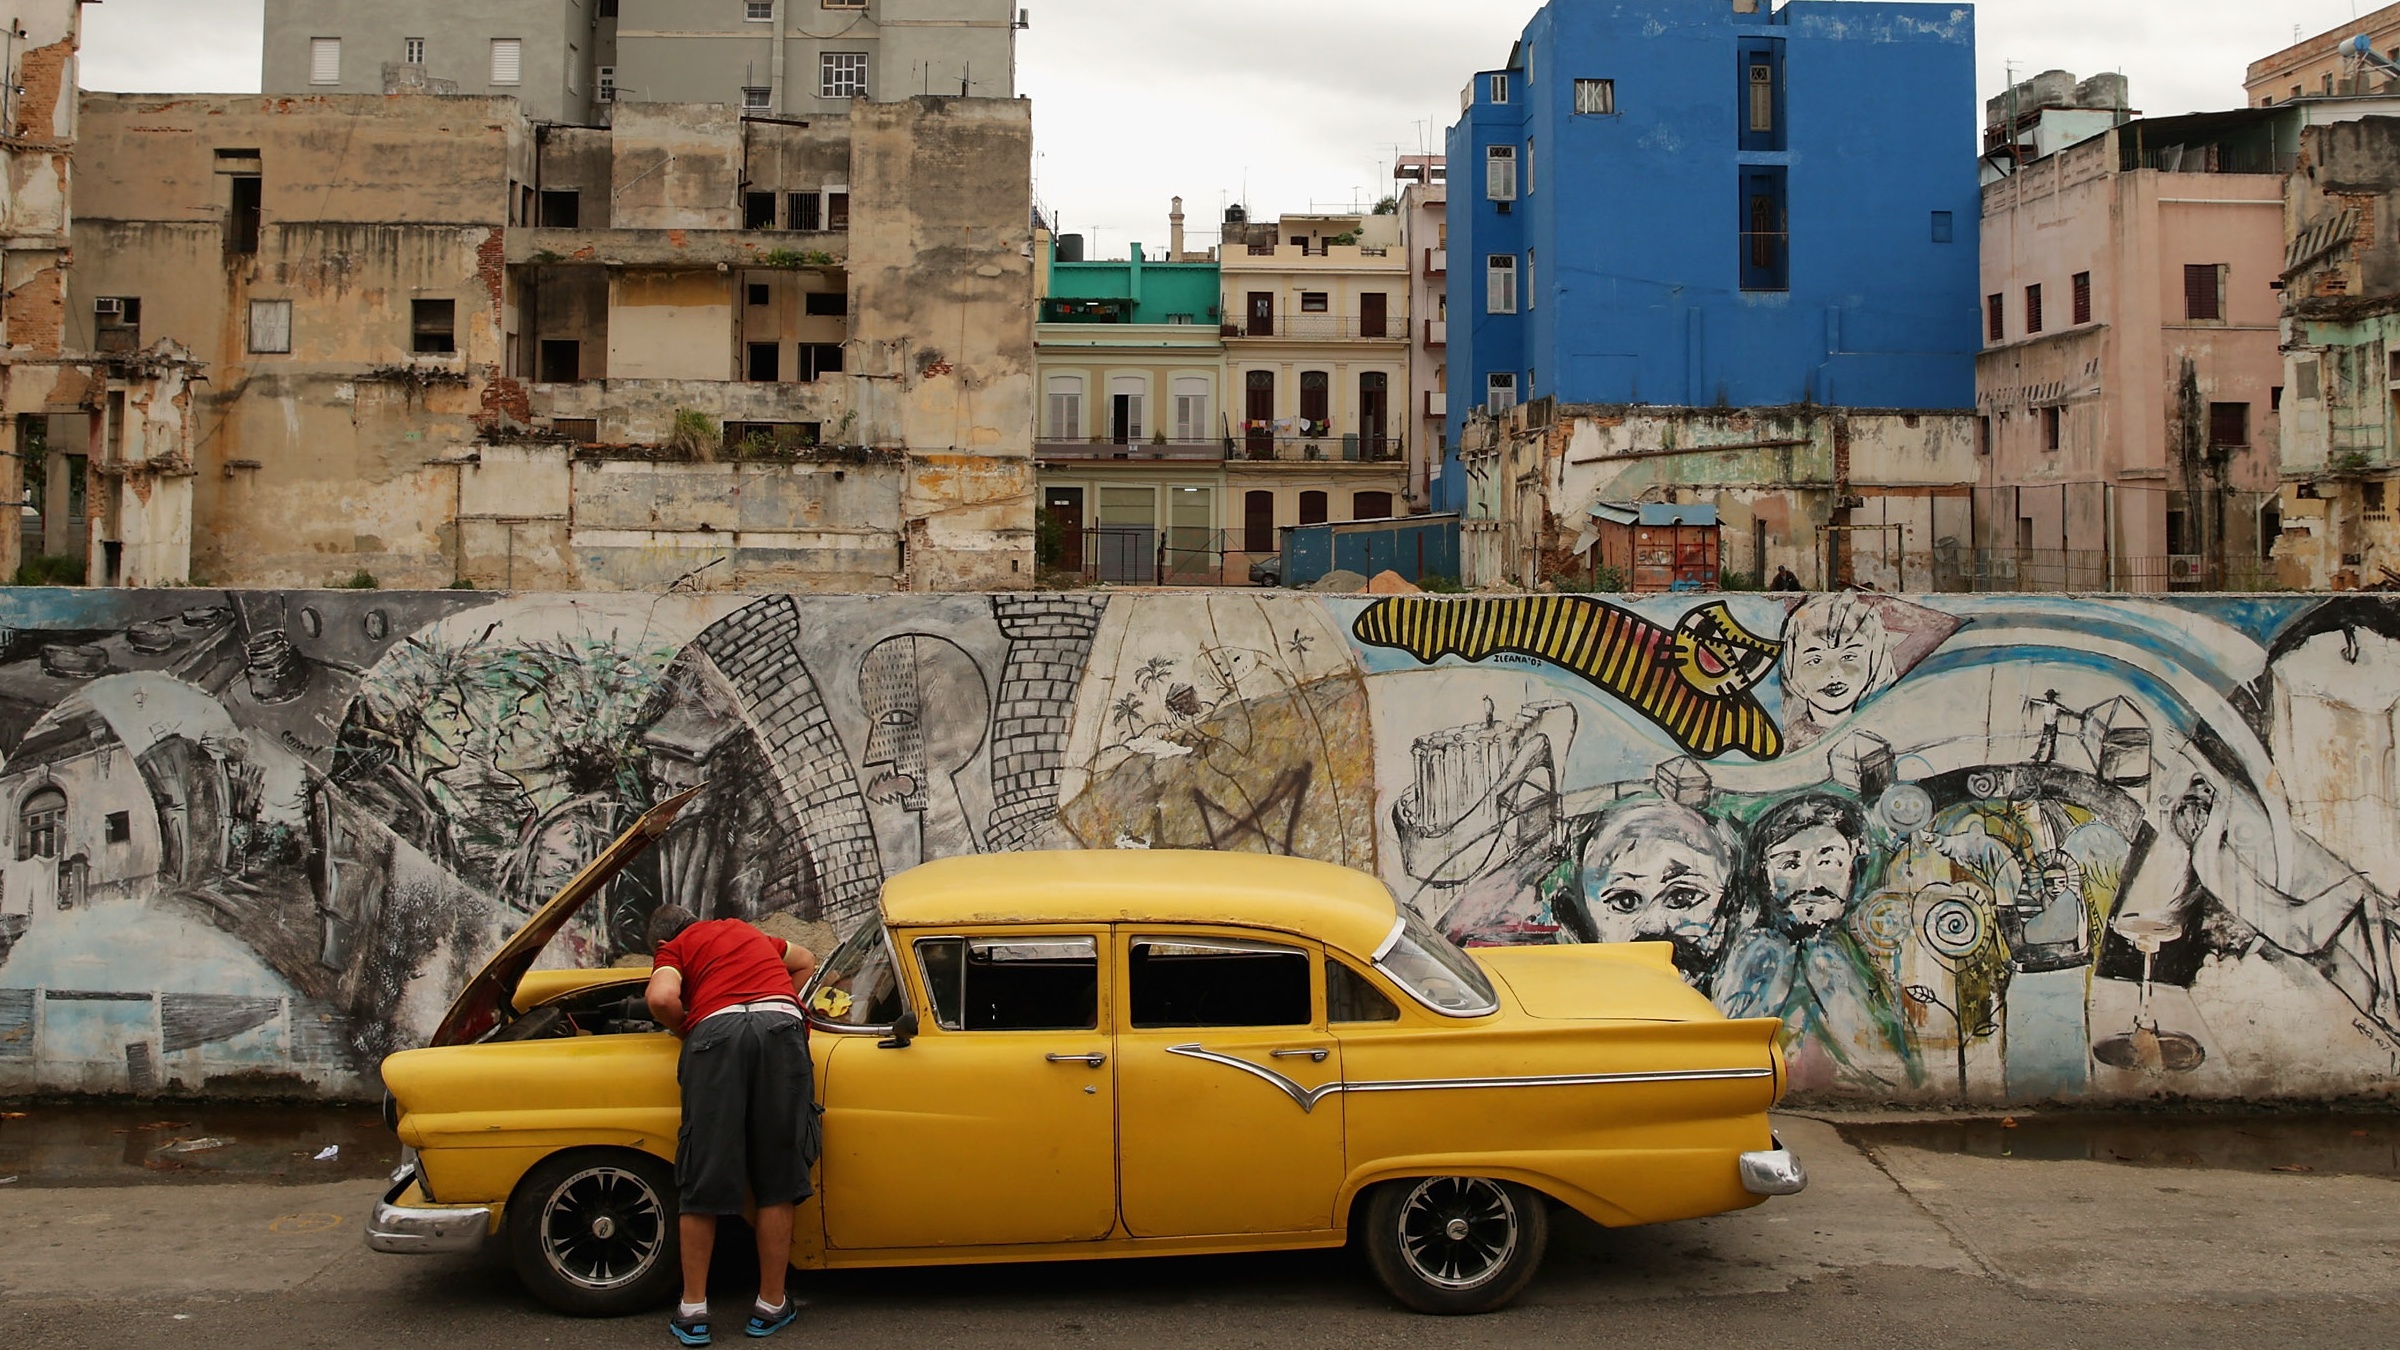 A man repairs his car in Havana, Cuba